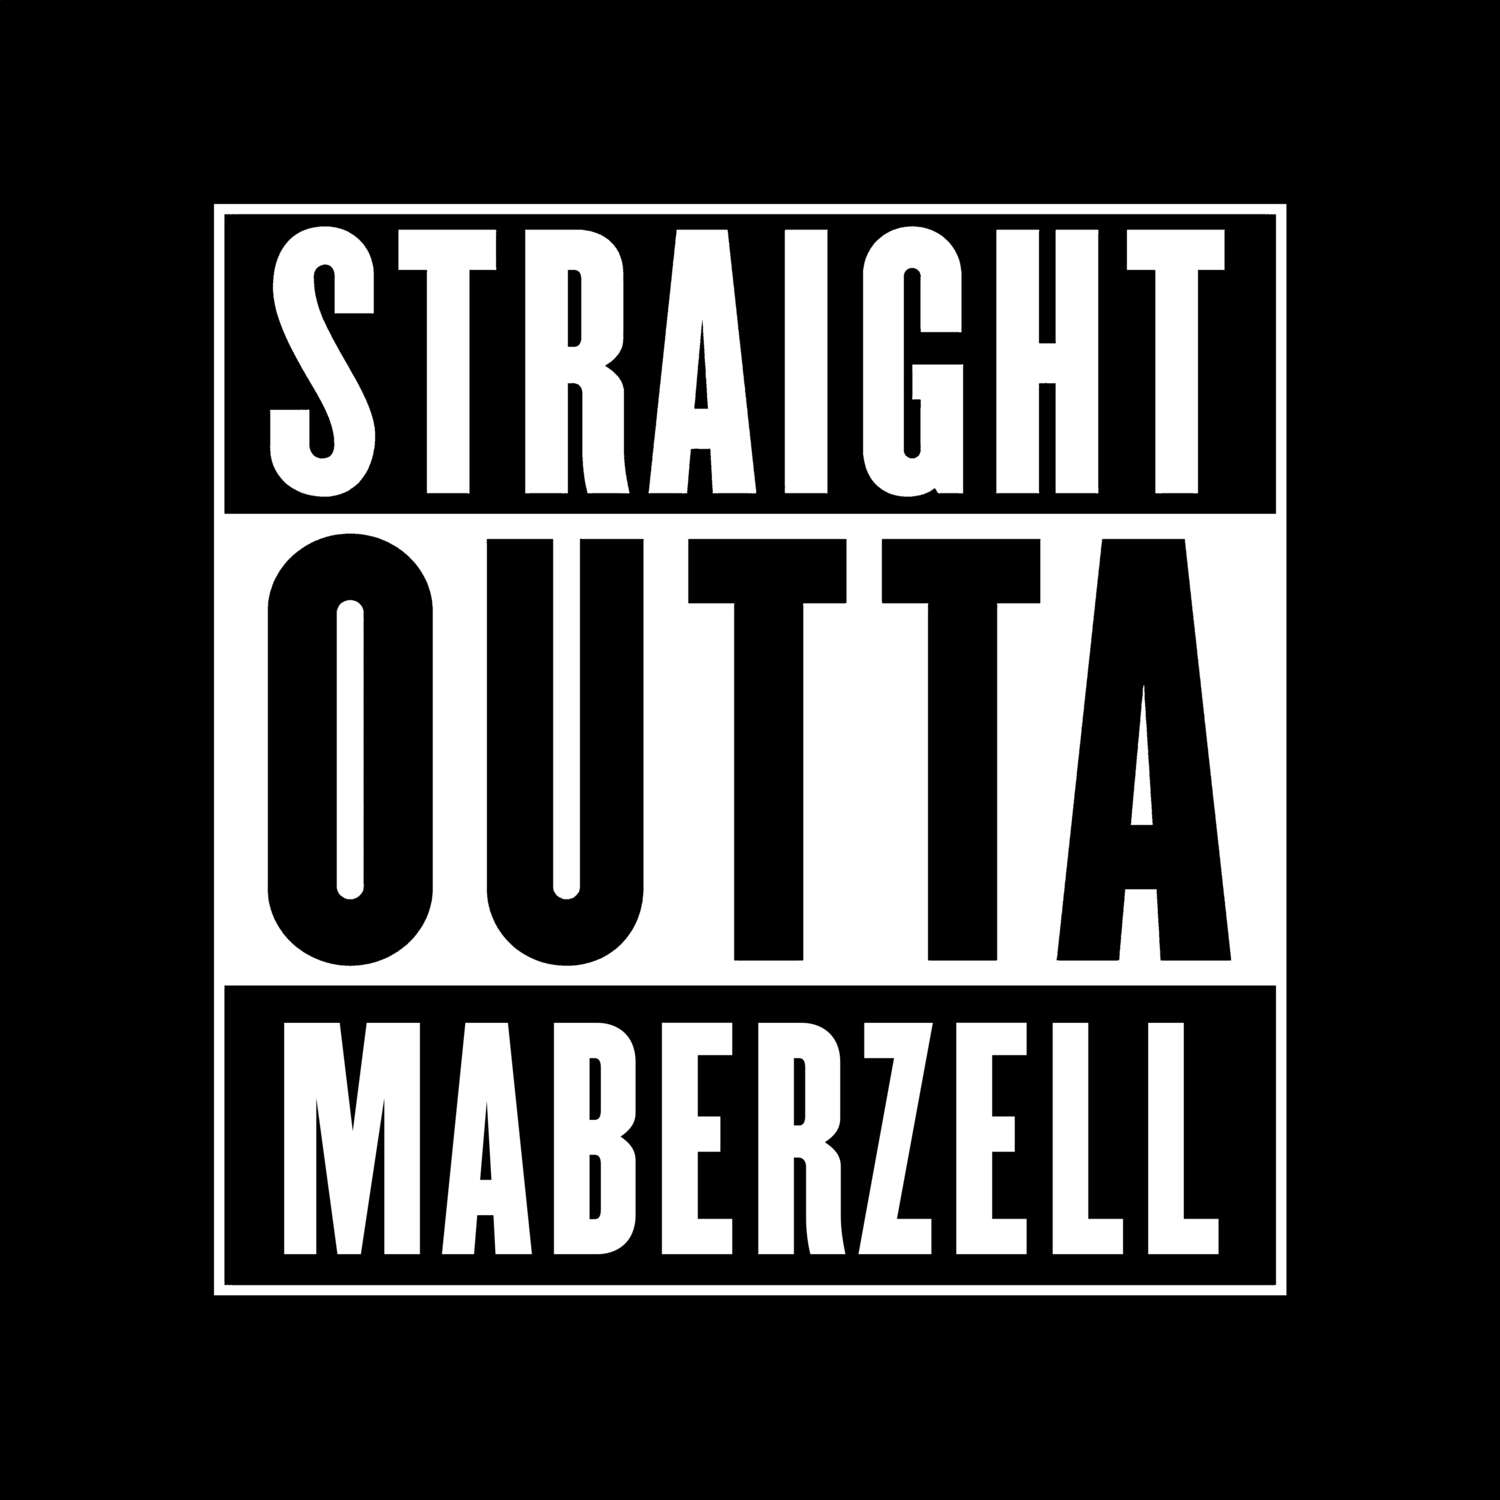 Maberzell T-Shirt »Straight Outta«